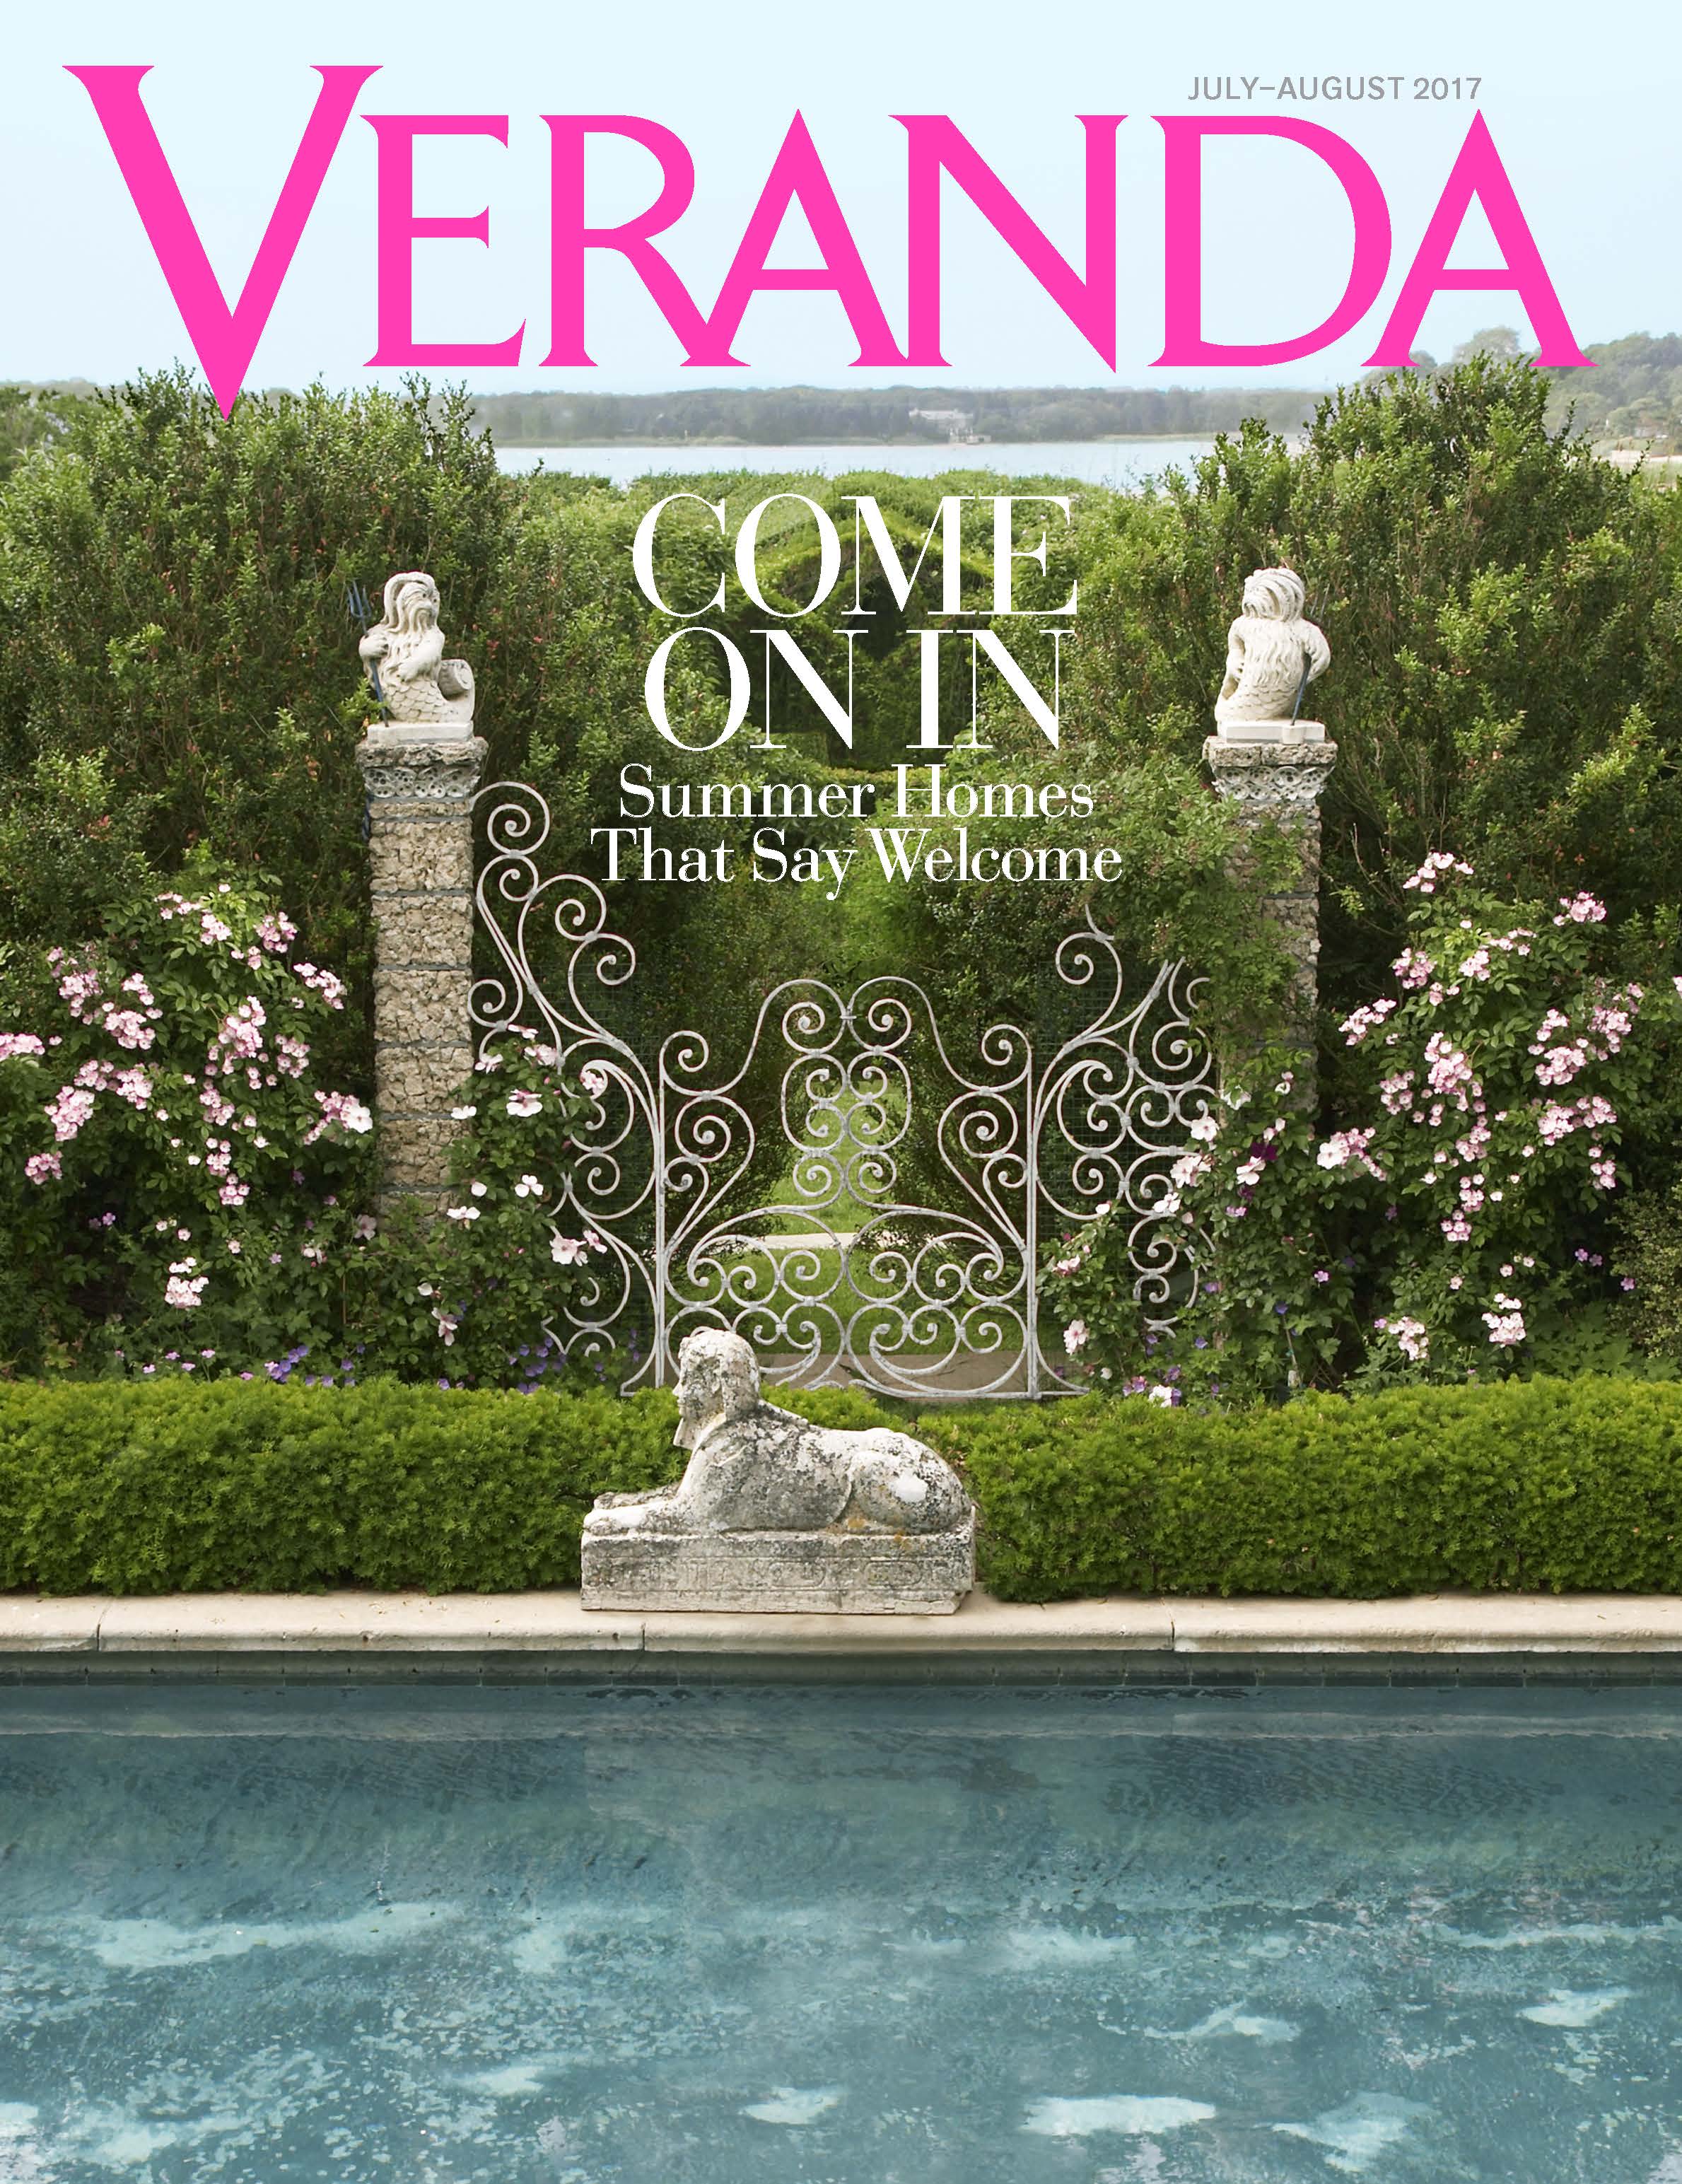 Veranda Magazine cover palmetto bluff moreland village by j banks design group feature